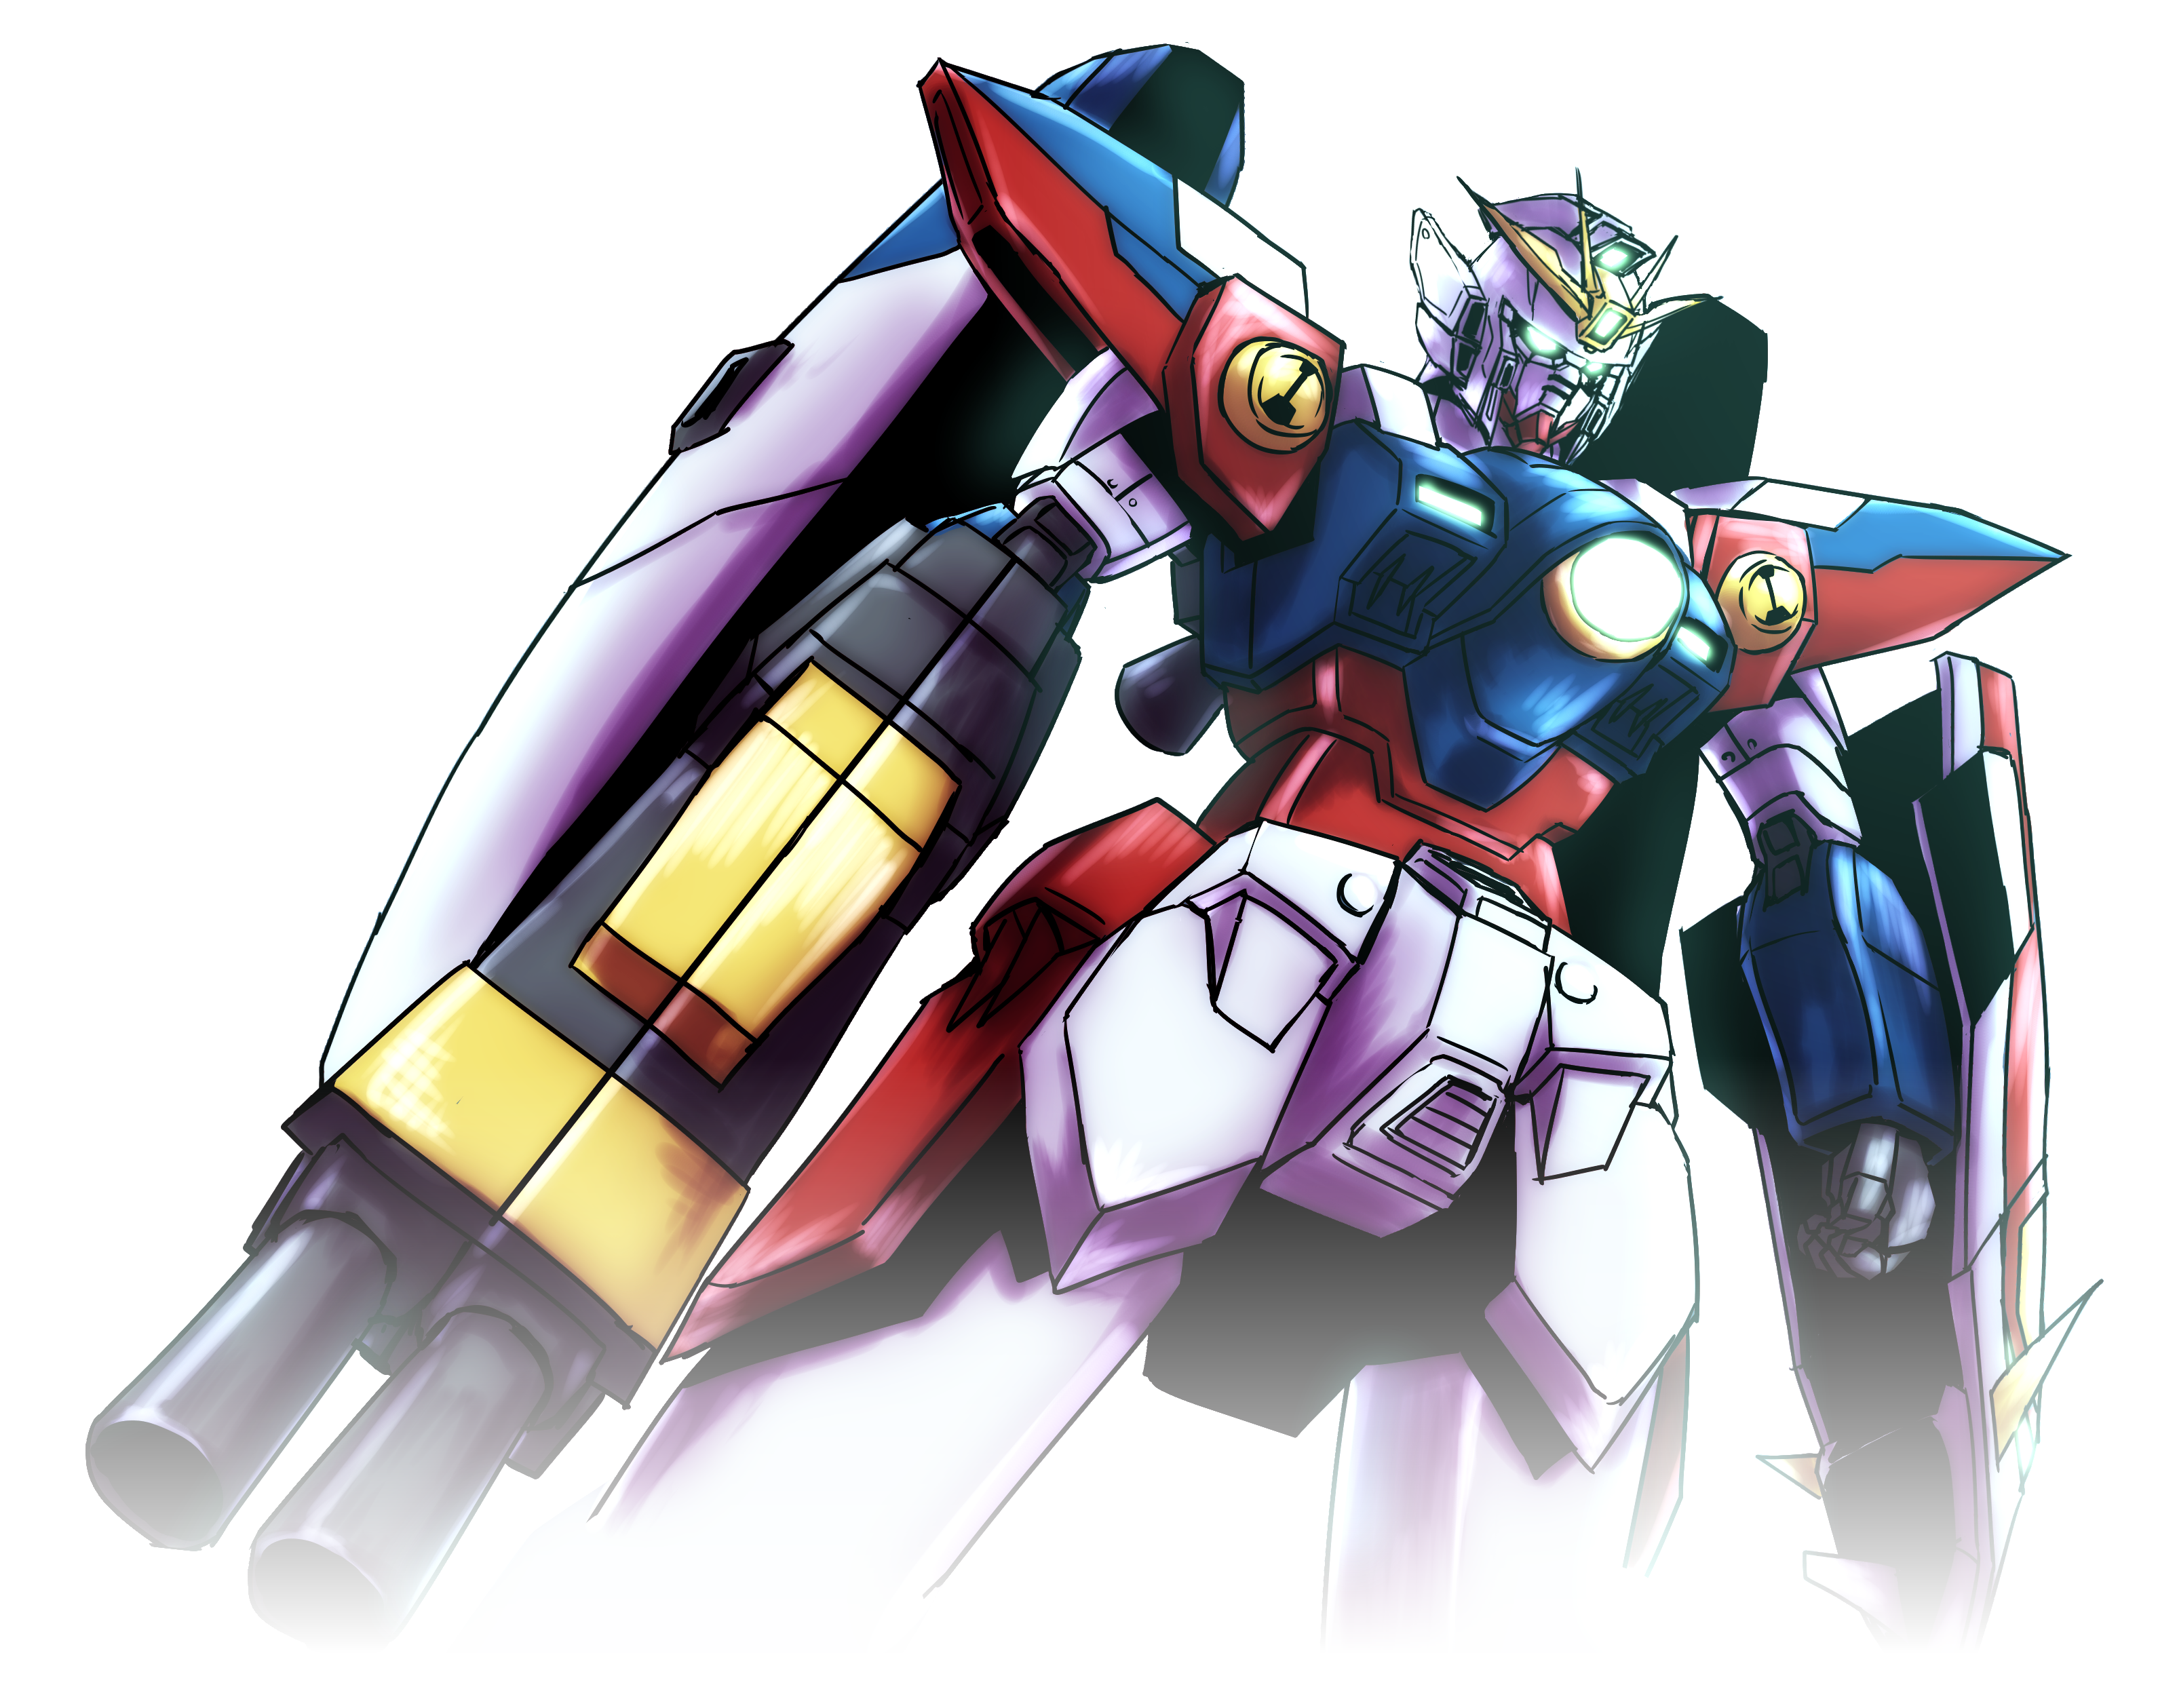 Anime 3209x2518 anime mechs Gundam Mobile Suit Gundam Wing Super Robot Taisen Wing Gundam Zero artwork digital art fan art